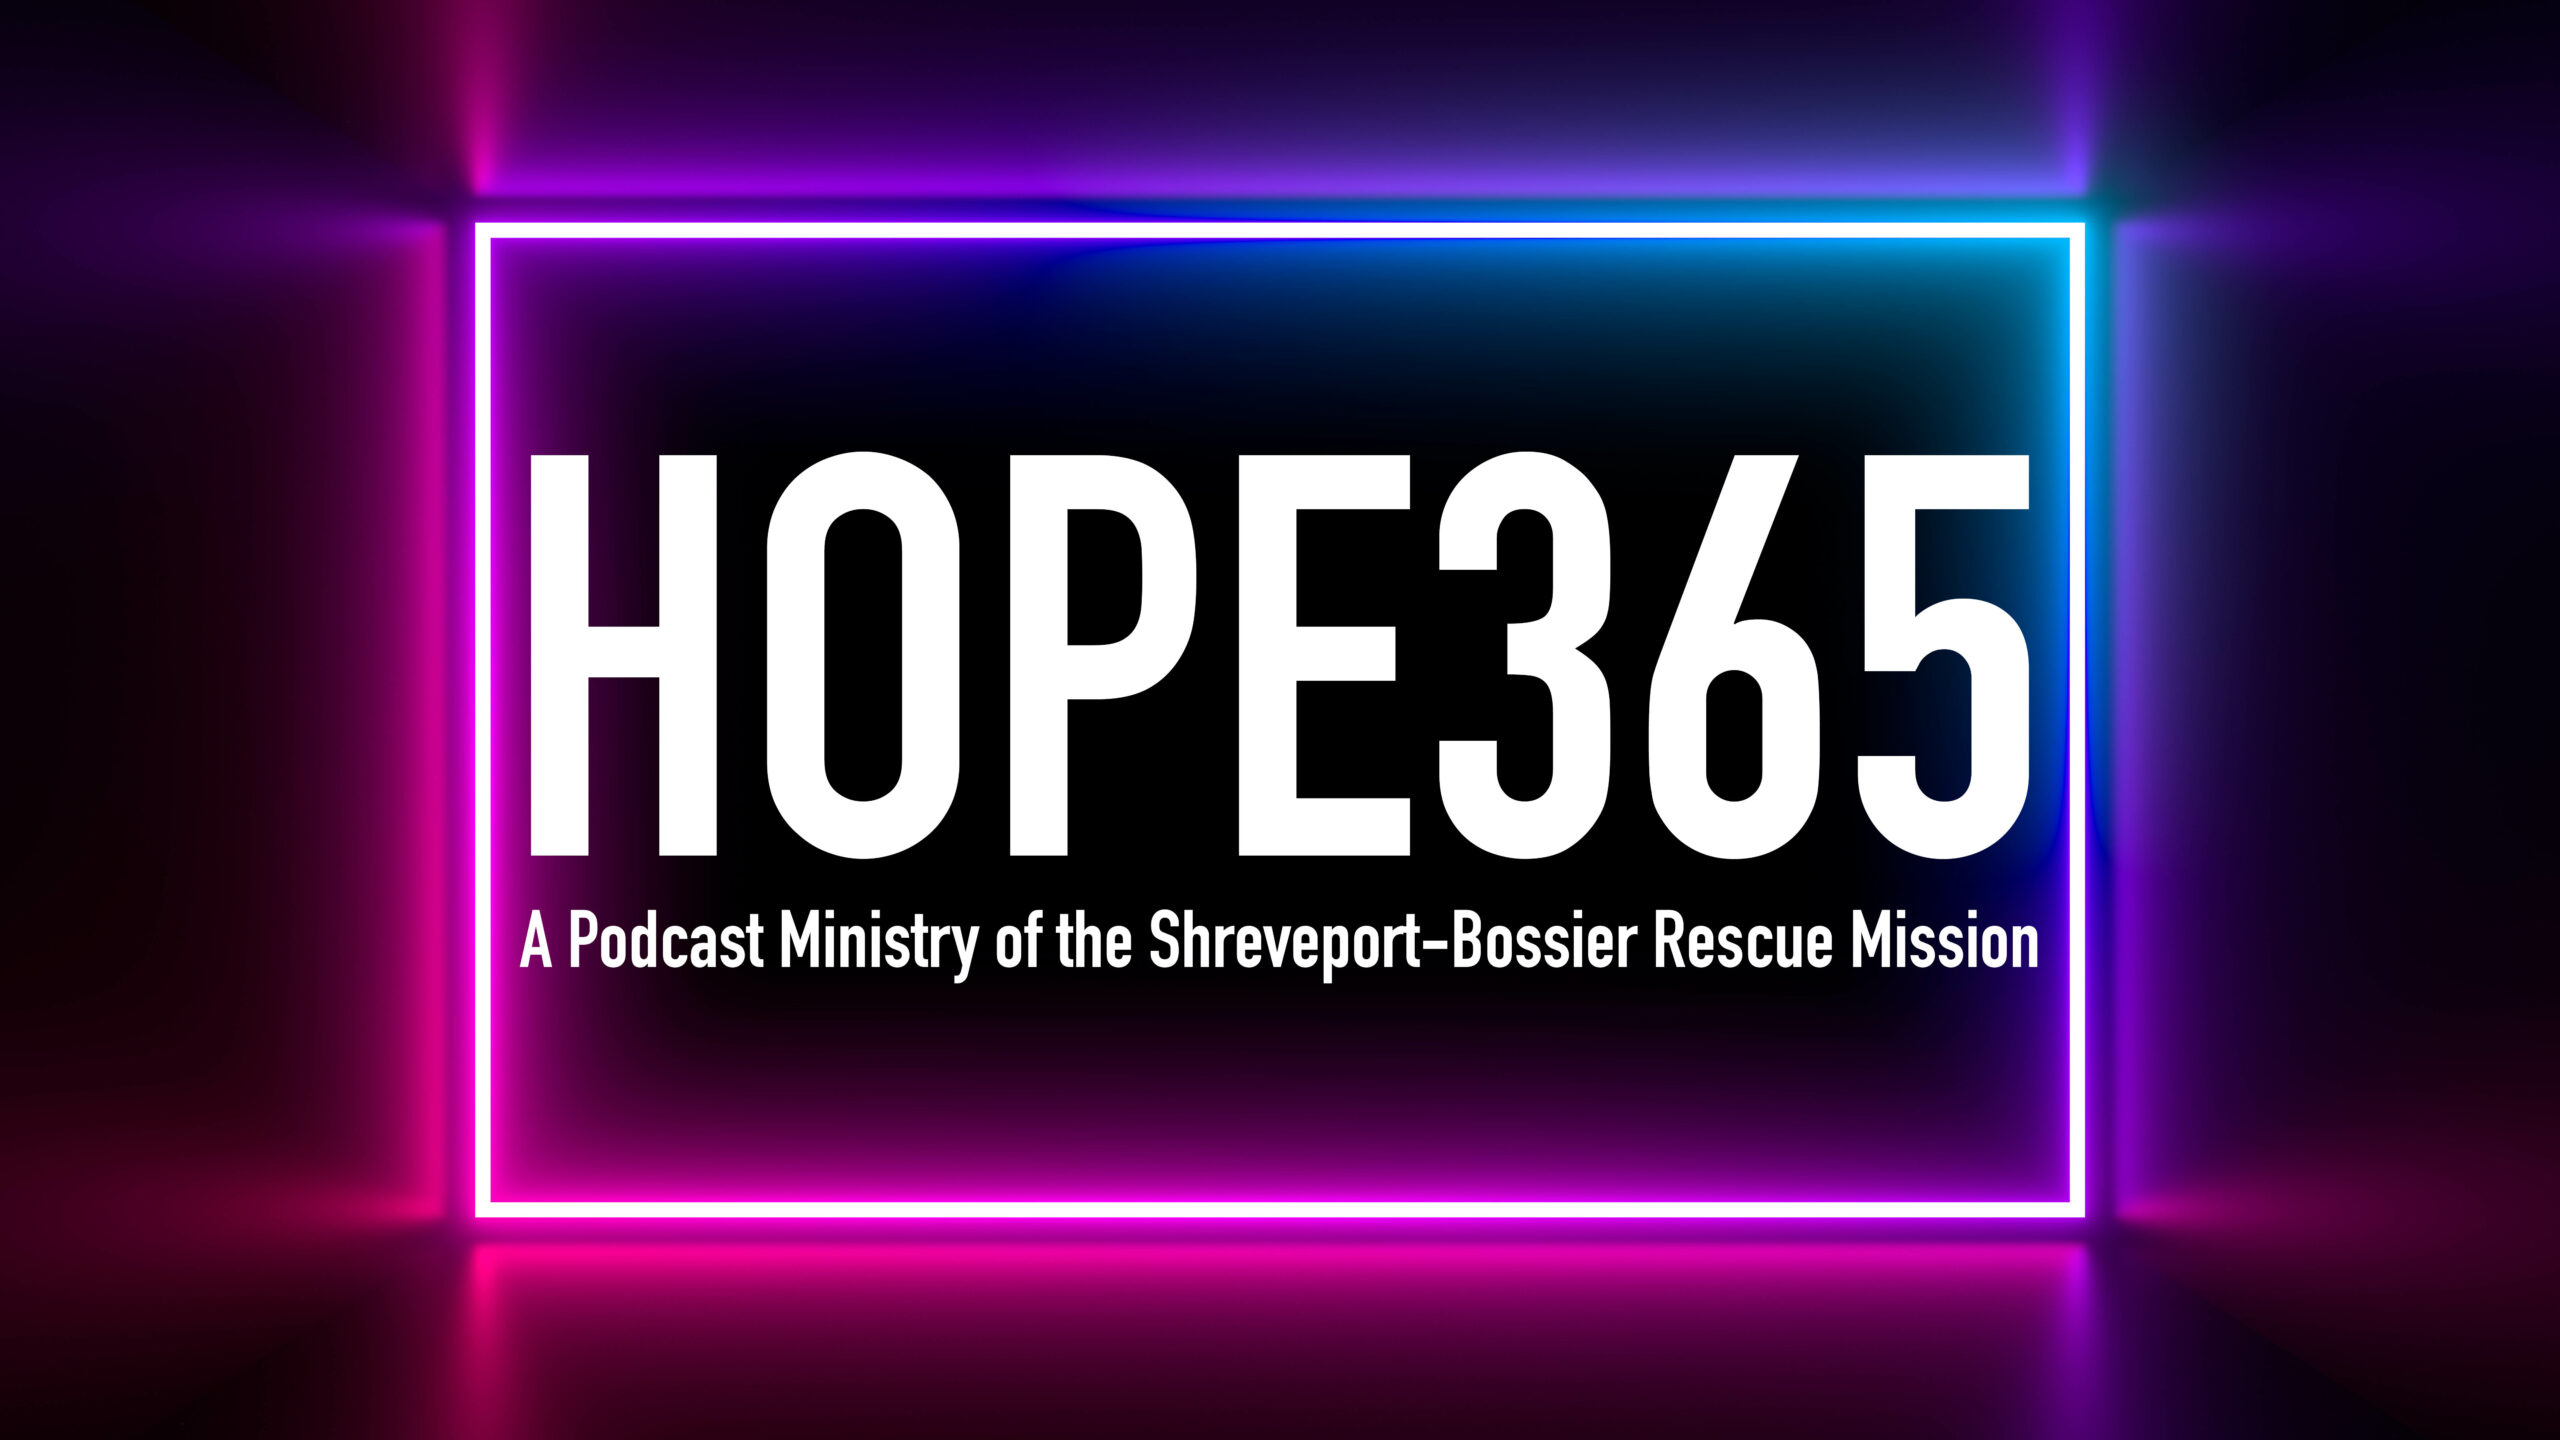 HOPE365 Podcast